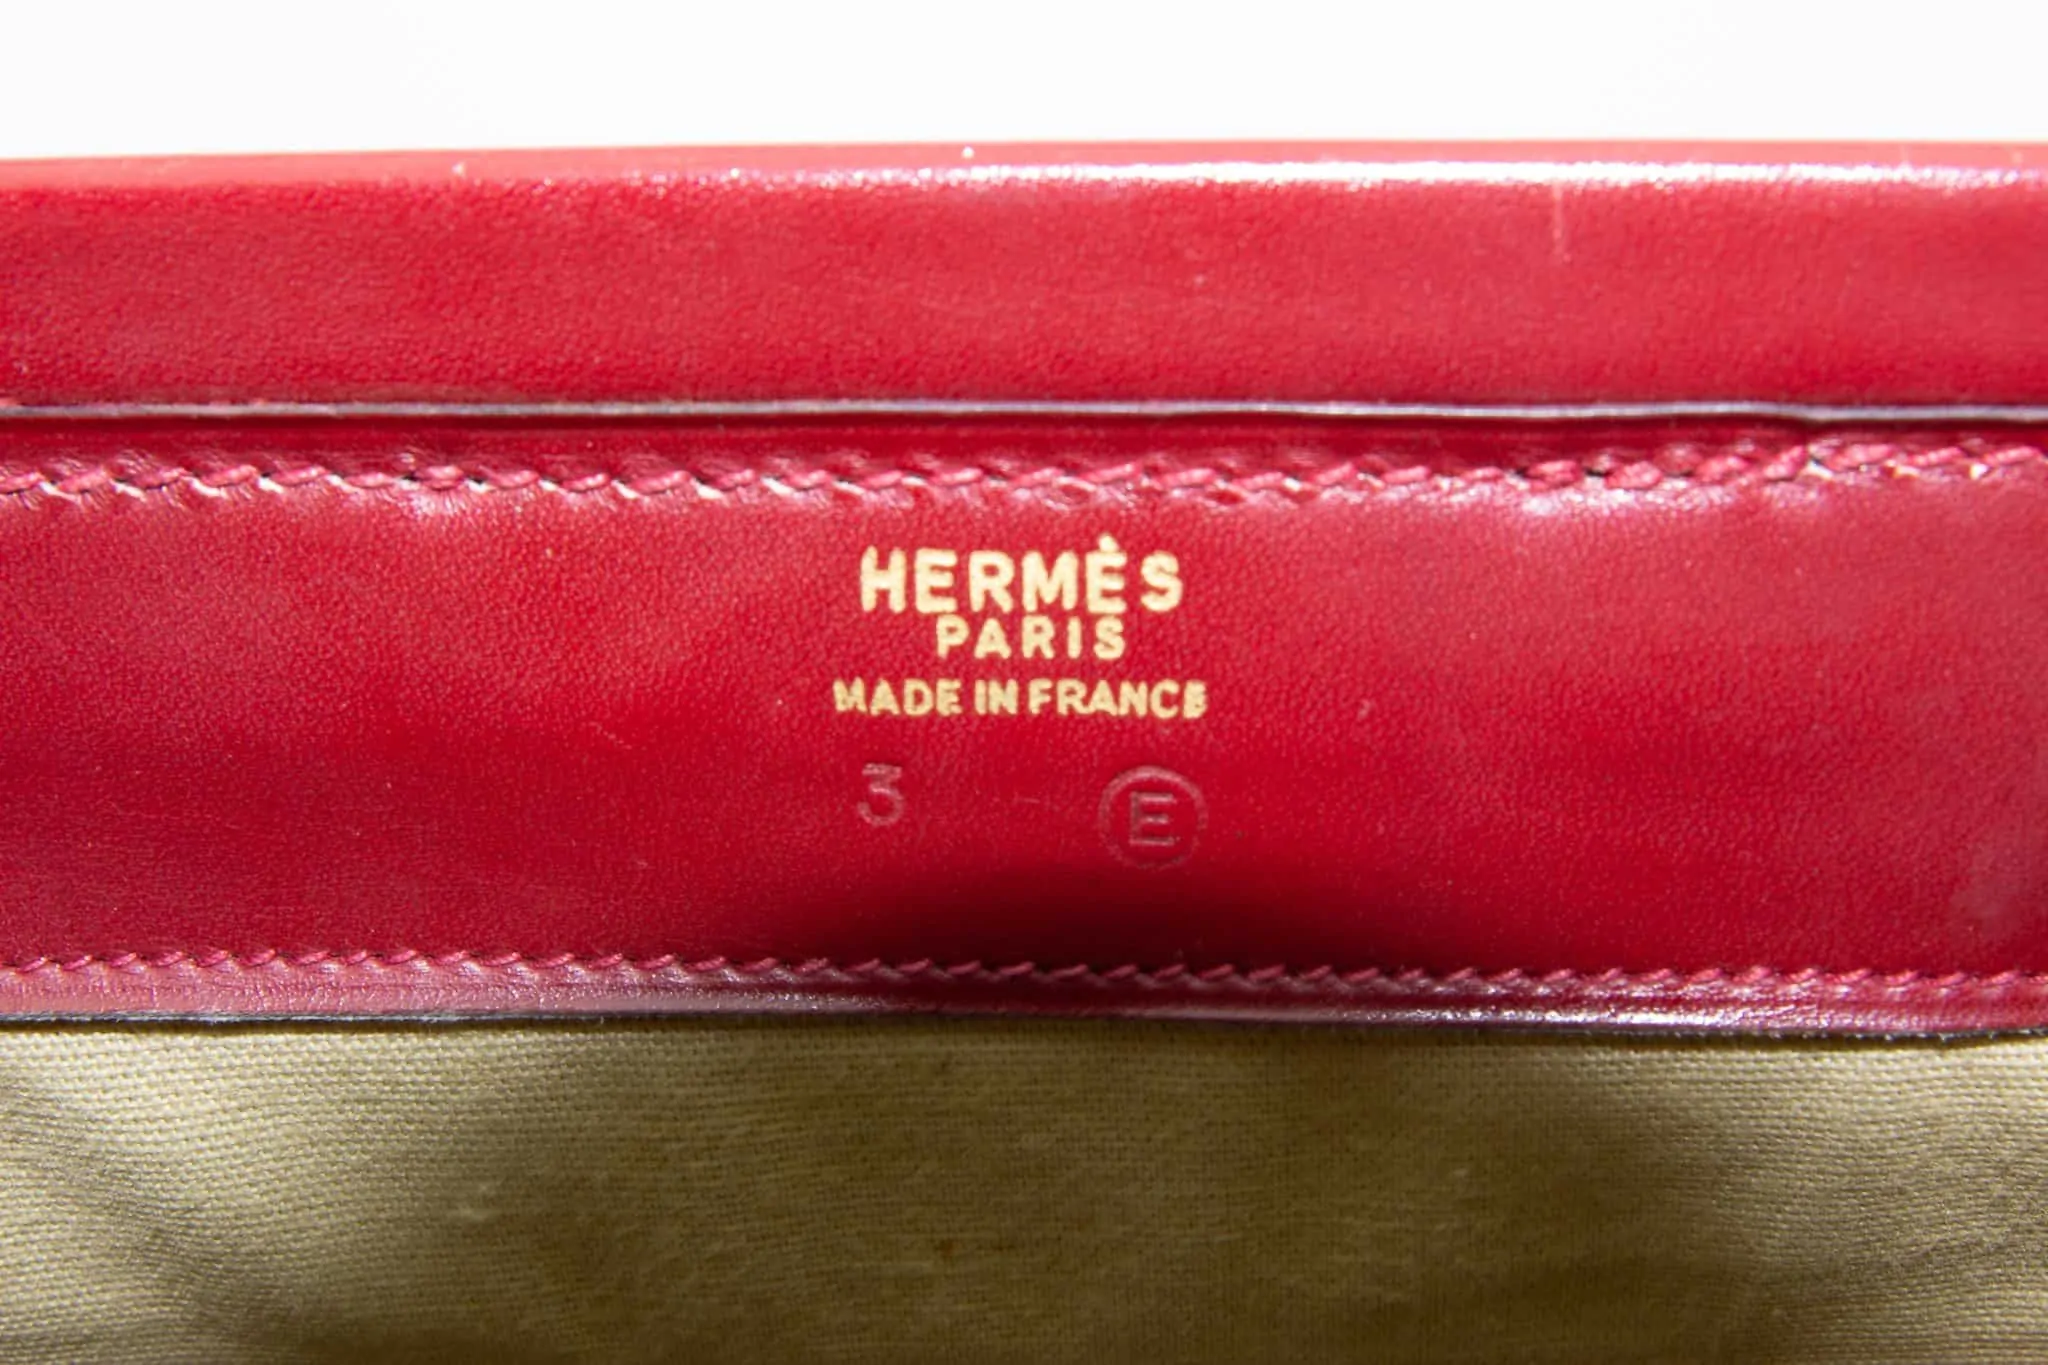 Hermes Berry burgundy bag vintage - Katheley's